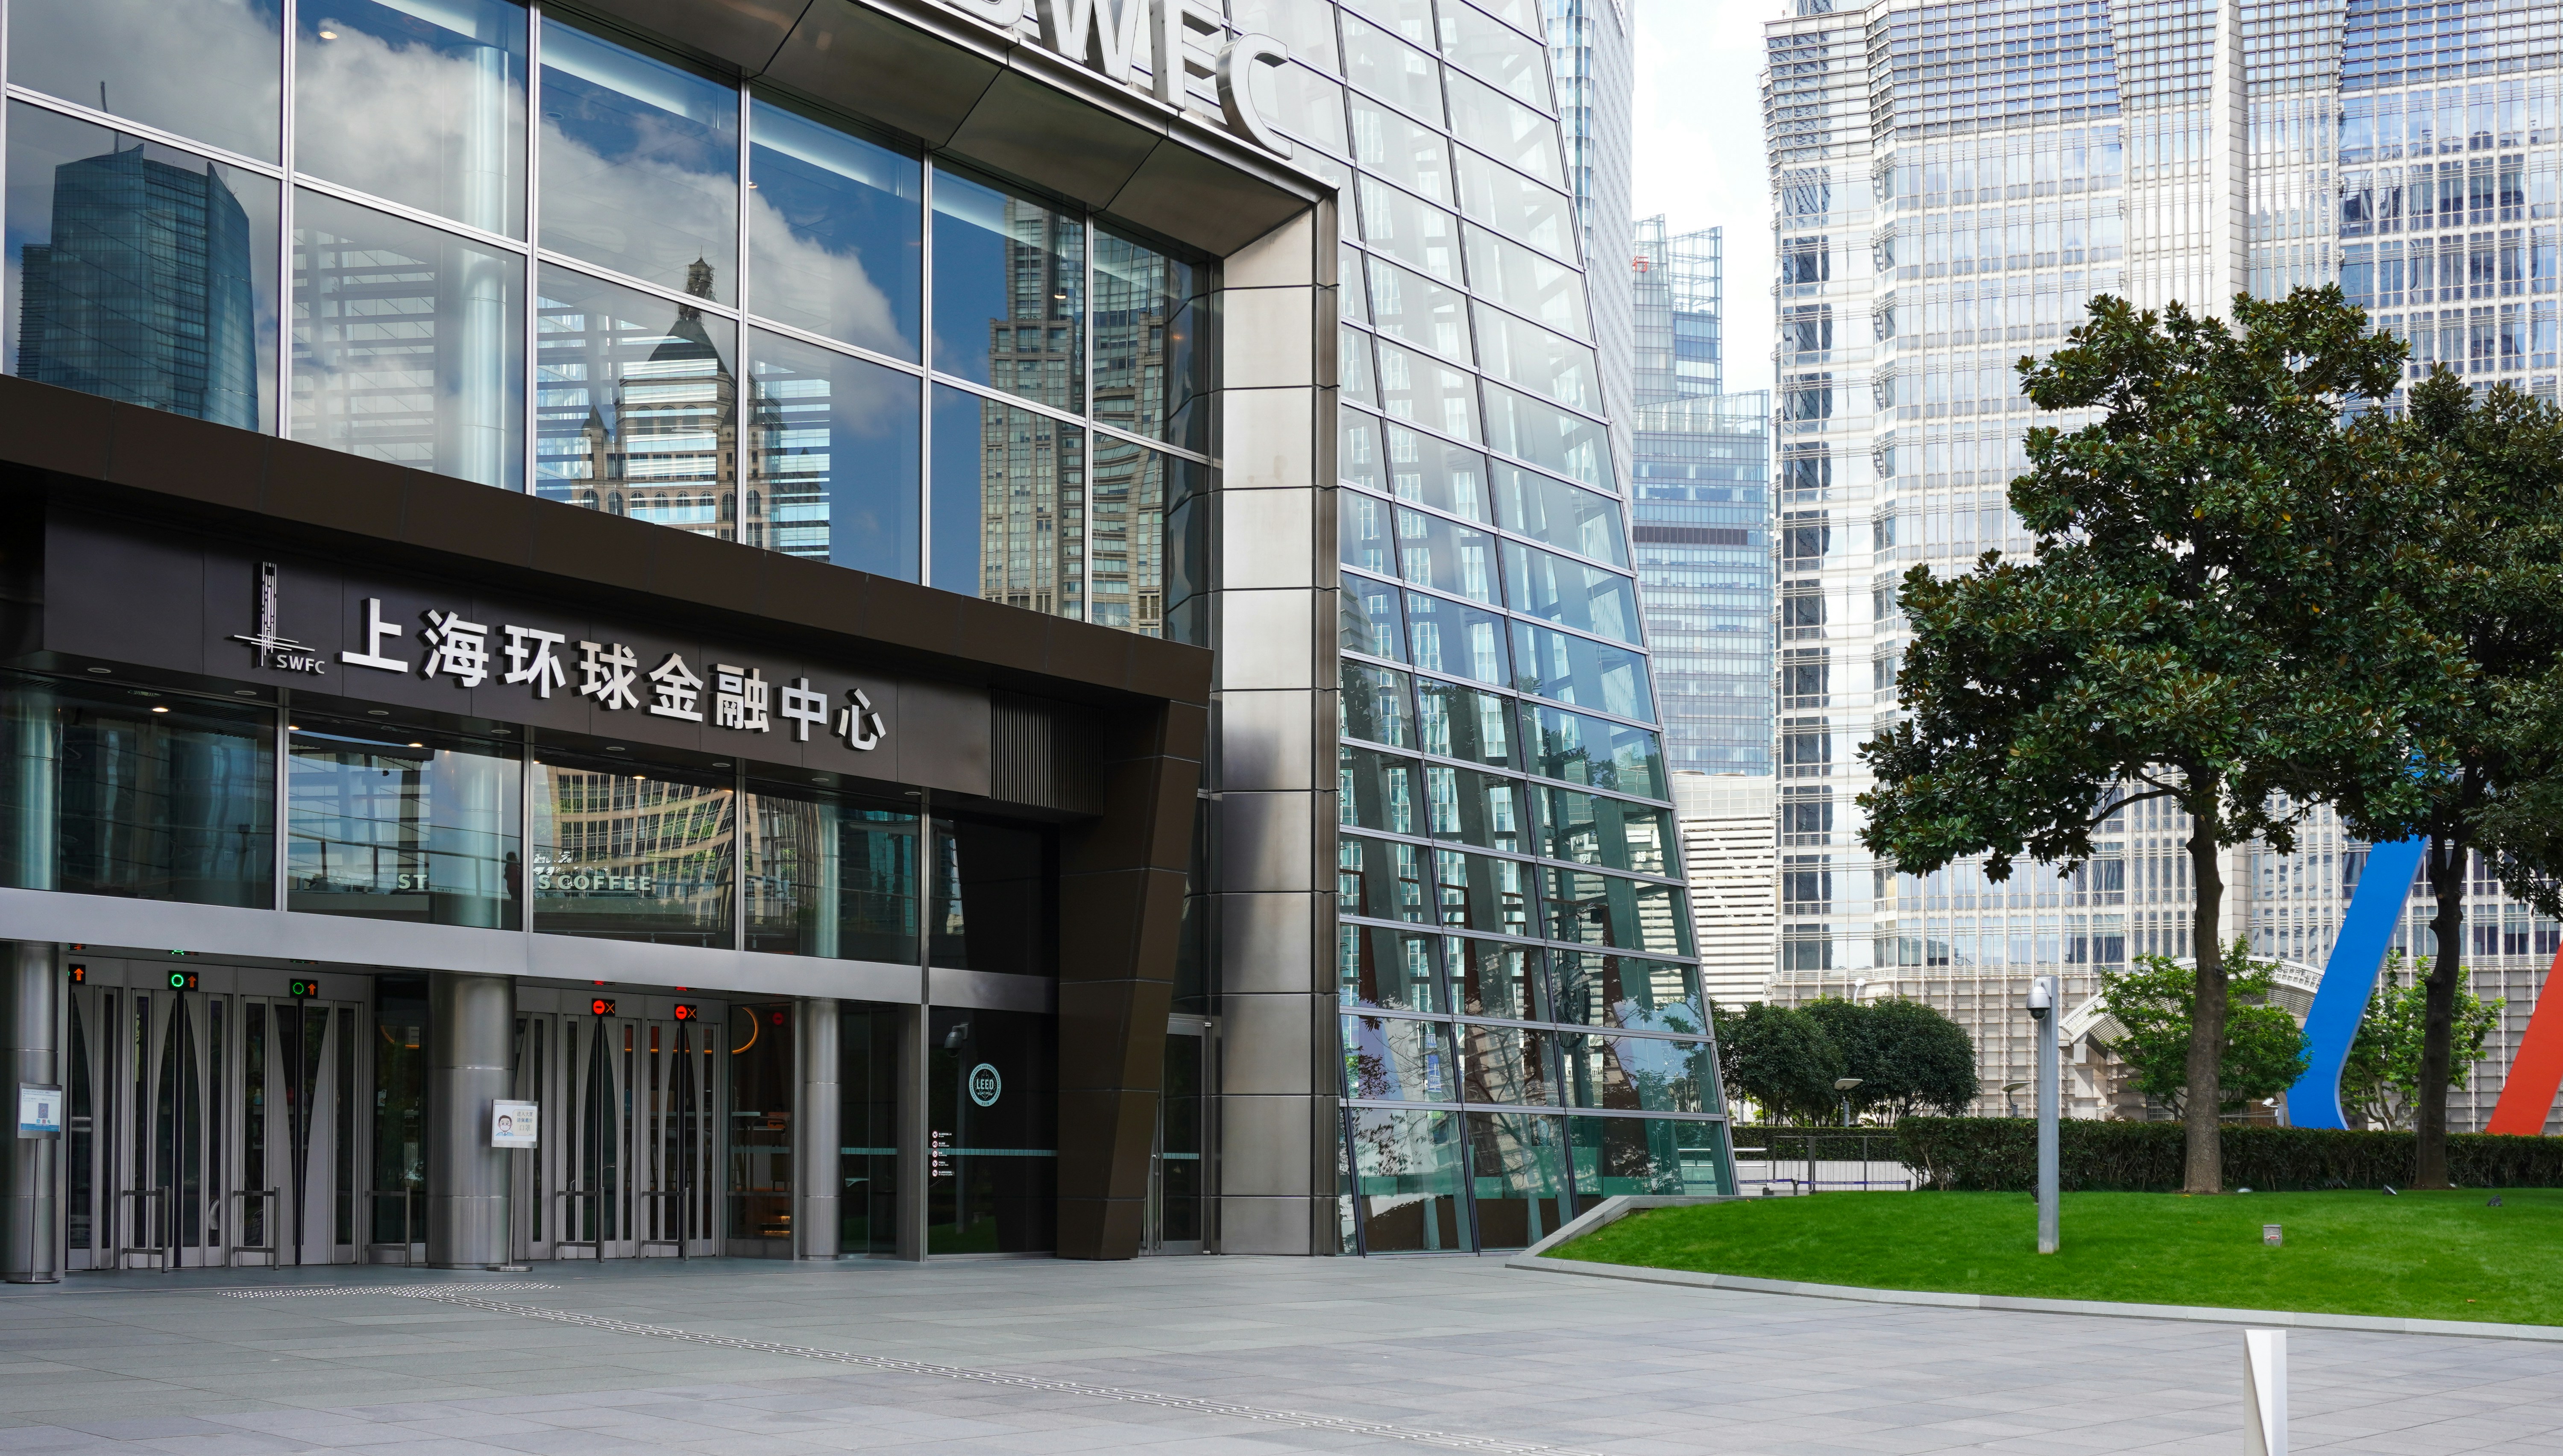 Oct. 5th, 2020 世纪大道 100 号 - 森大厦·上海环球金融中心办公设施入口 Shanghai World Financial Center Office Facilities Entrance